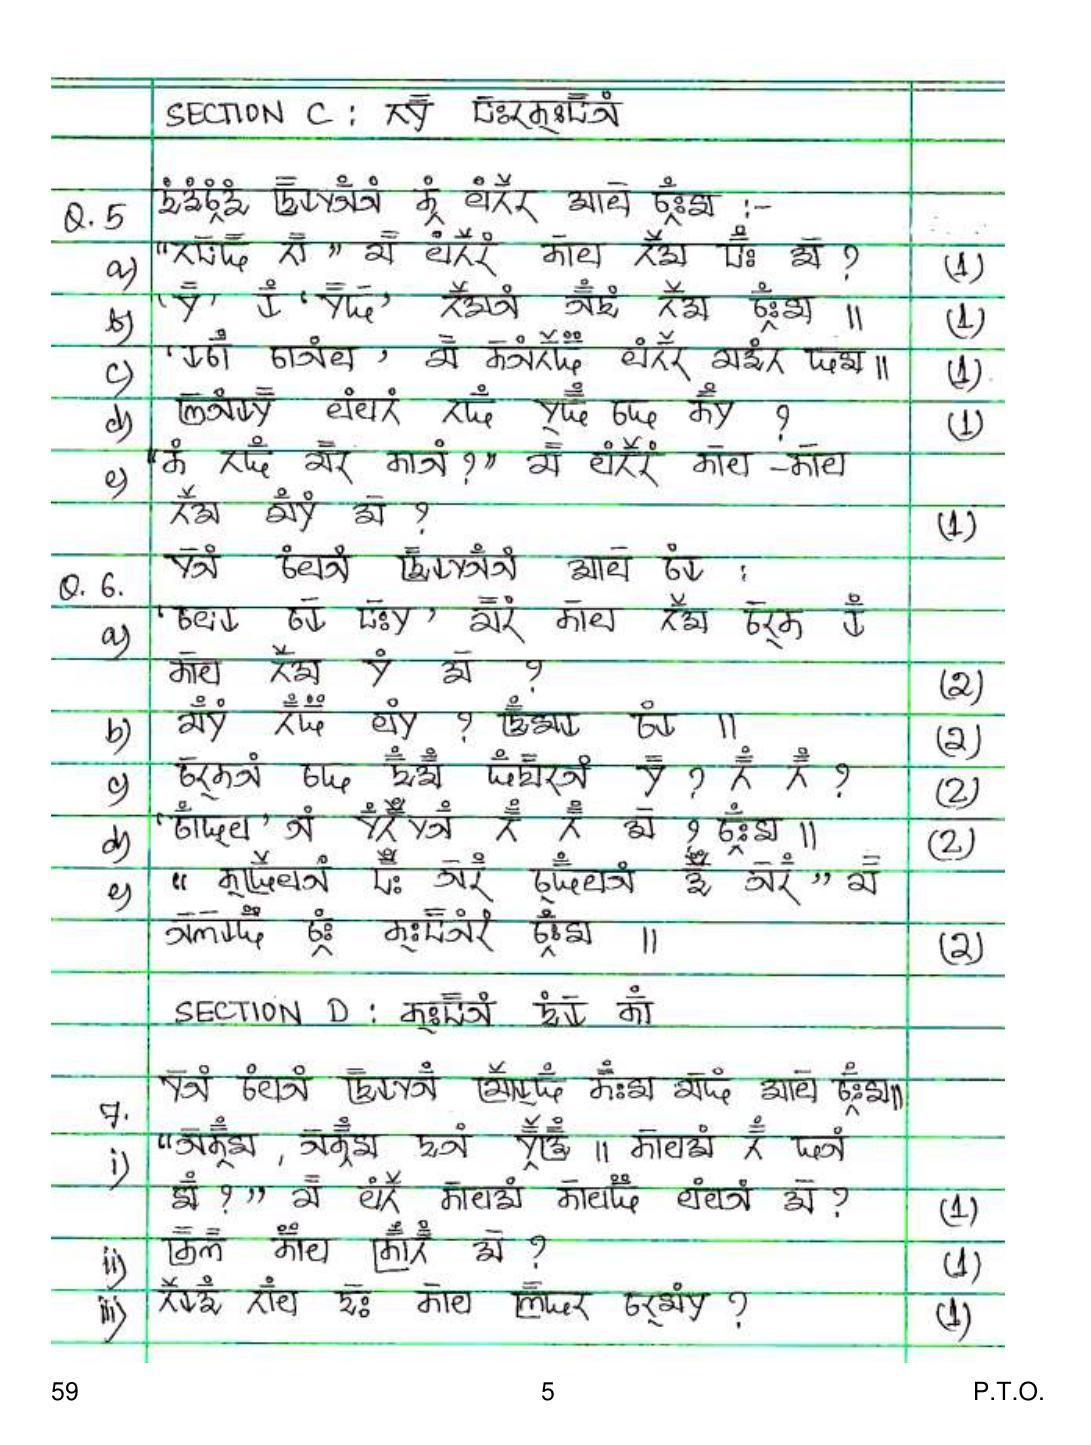 CBSE Class 10 59 Gurung 2019 Question Paper - Page 5